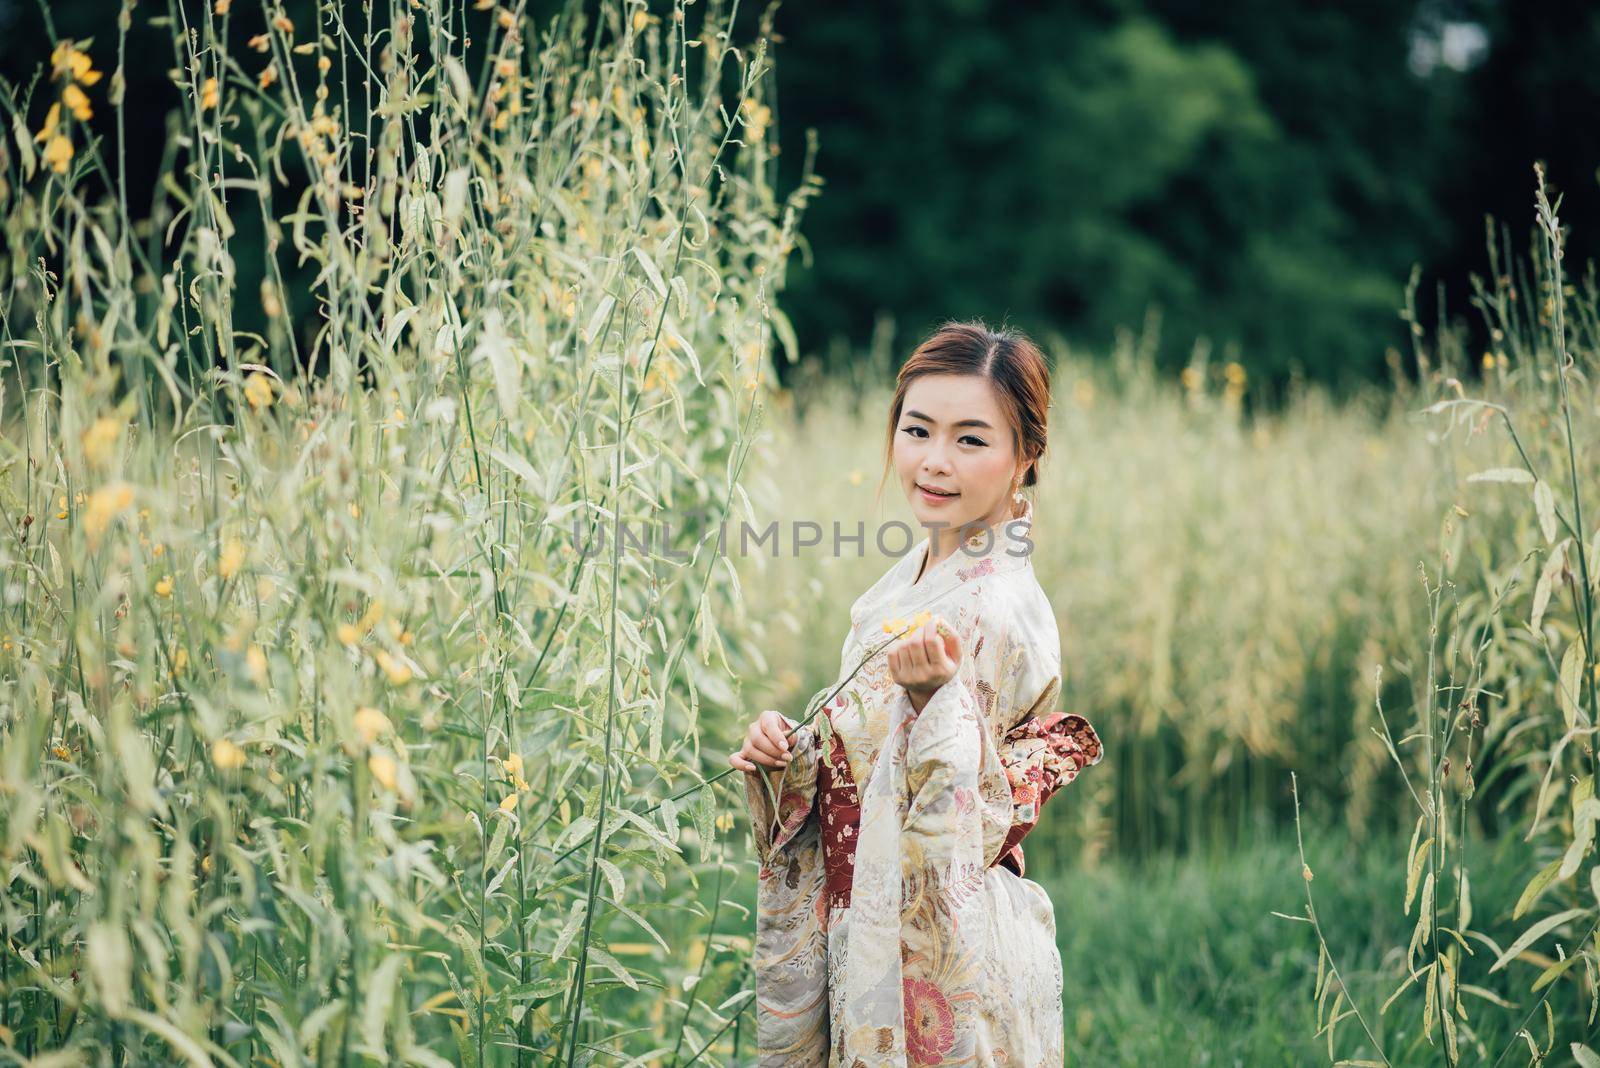 The girl cute with japanese yukata by Wmpix